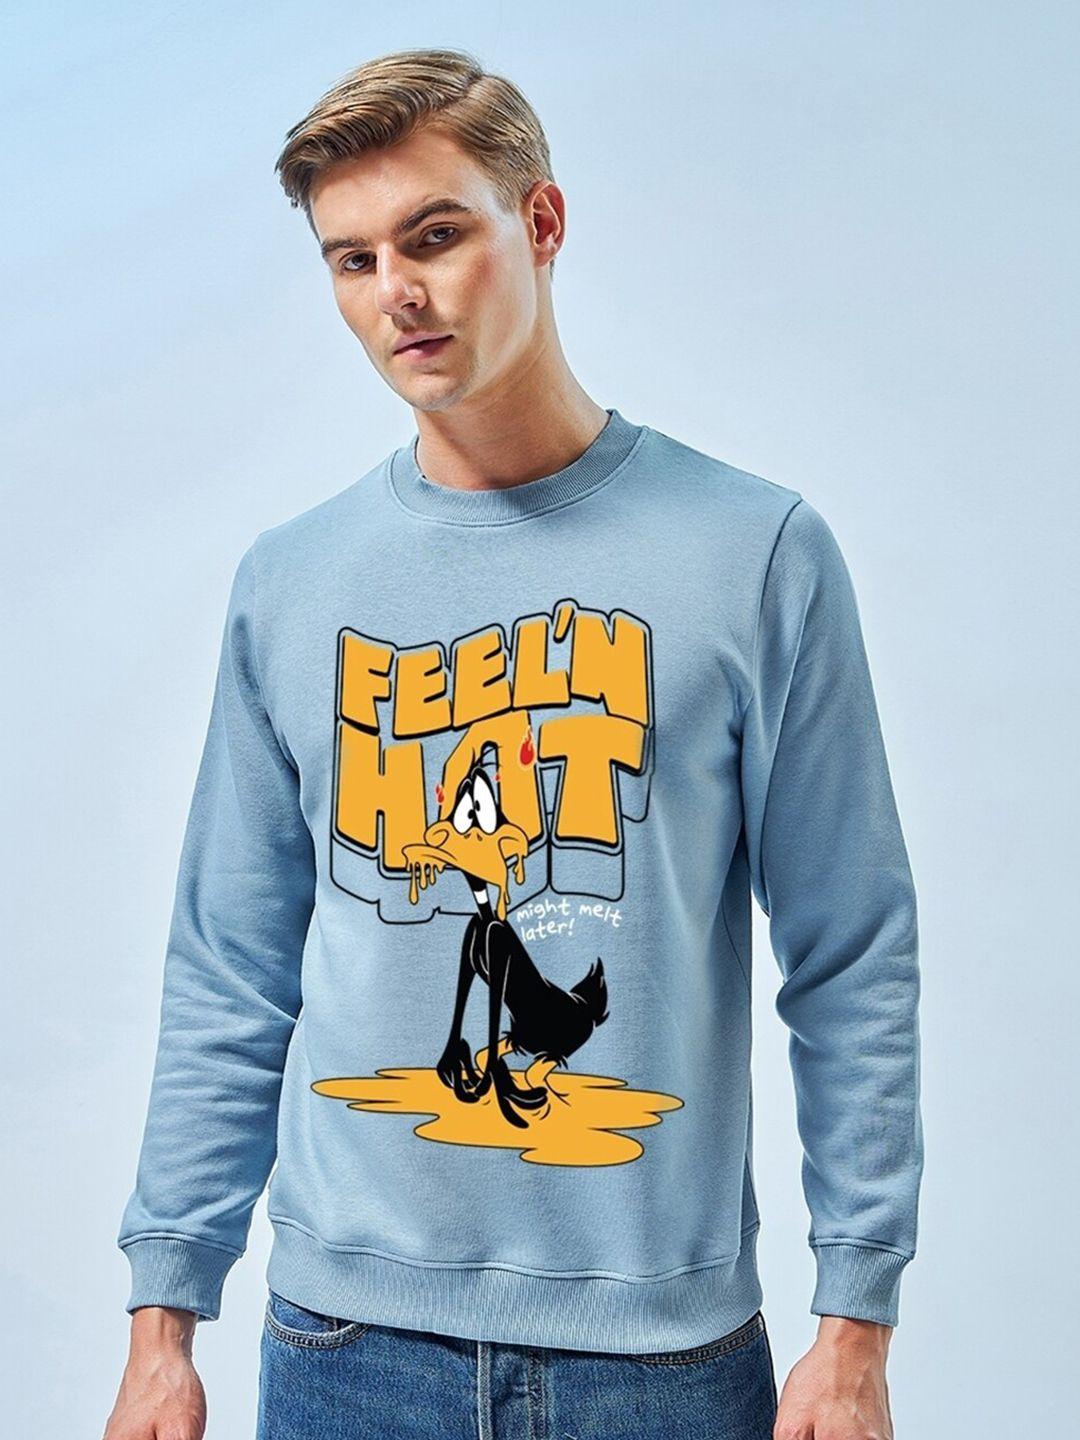 bewakoof-official-looney-tunes-merchandise-feel'n-hot-graphic-printed-oversized-sweatshirt